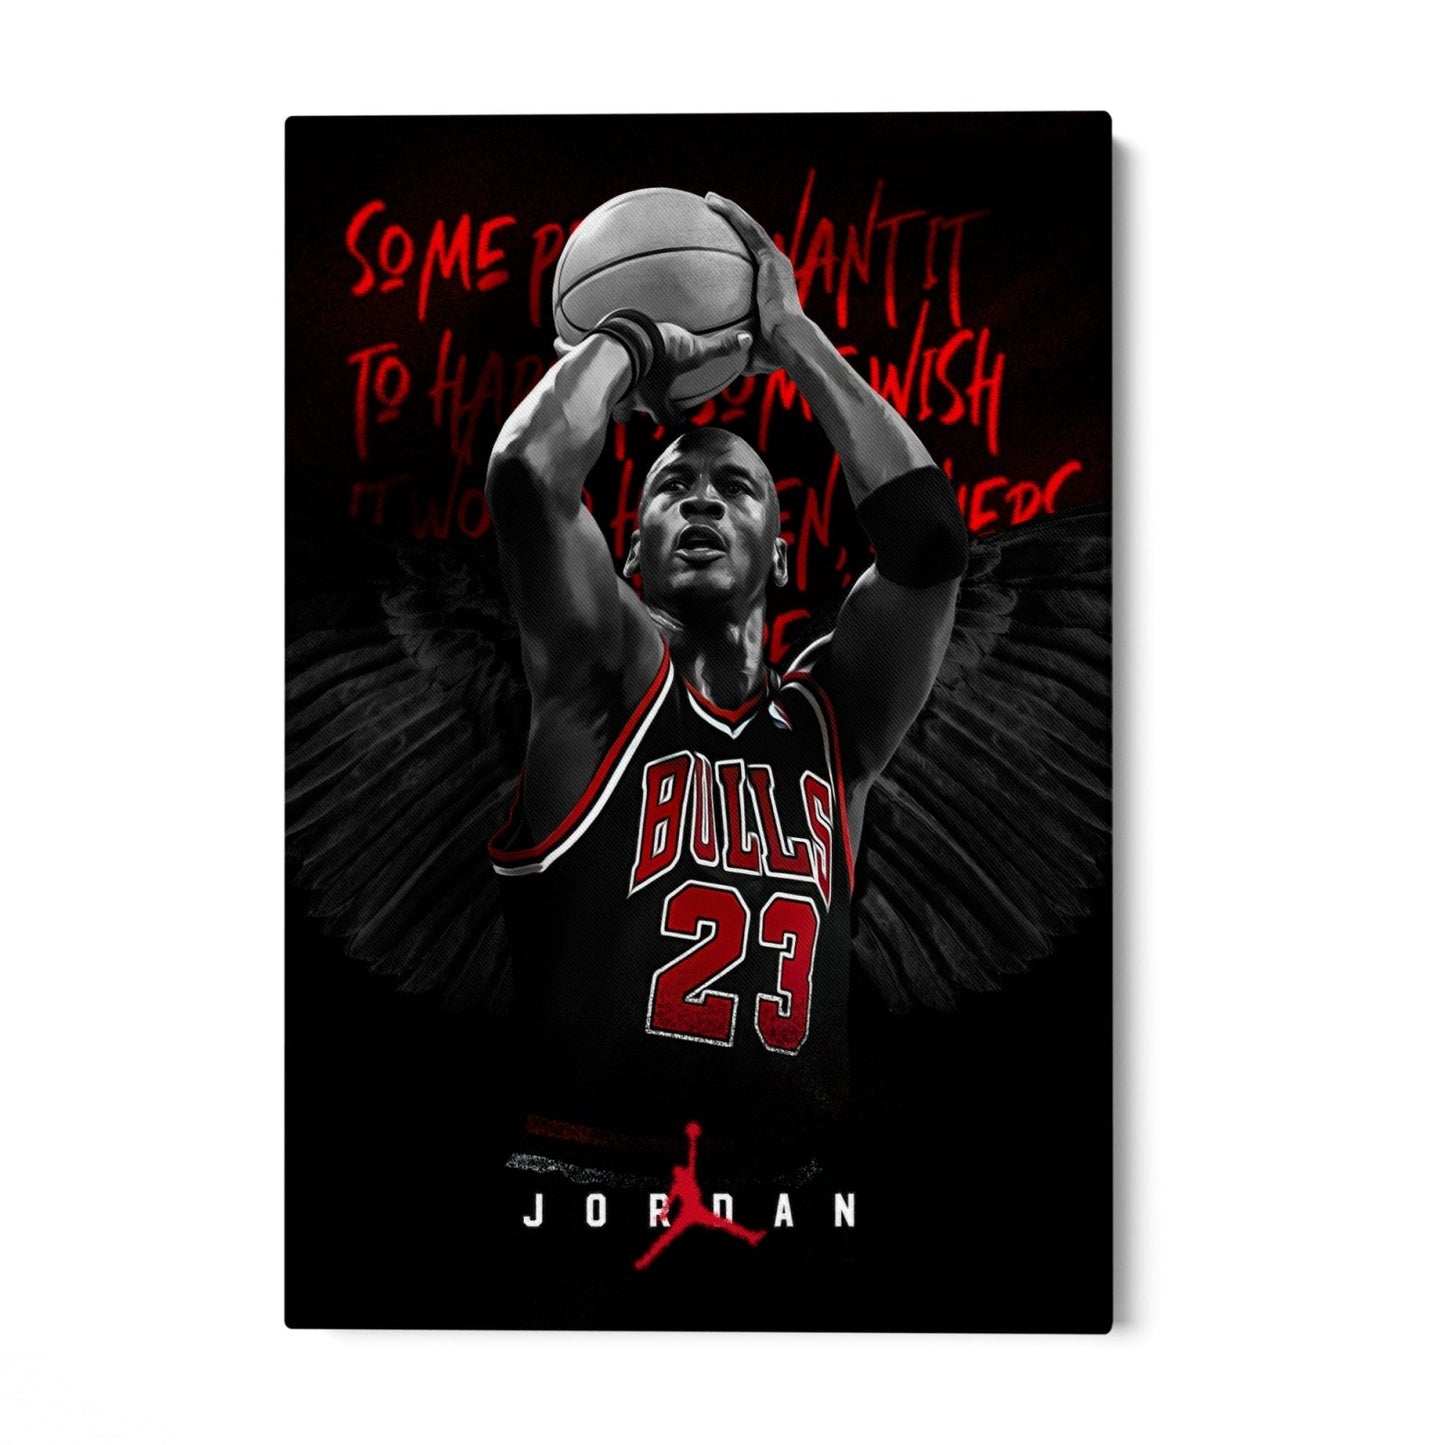 Jordanas „Bulls“ 23